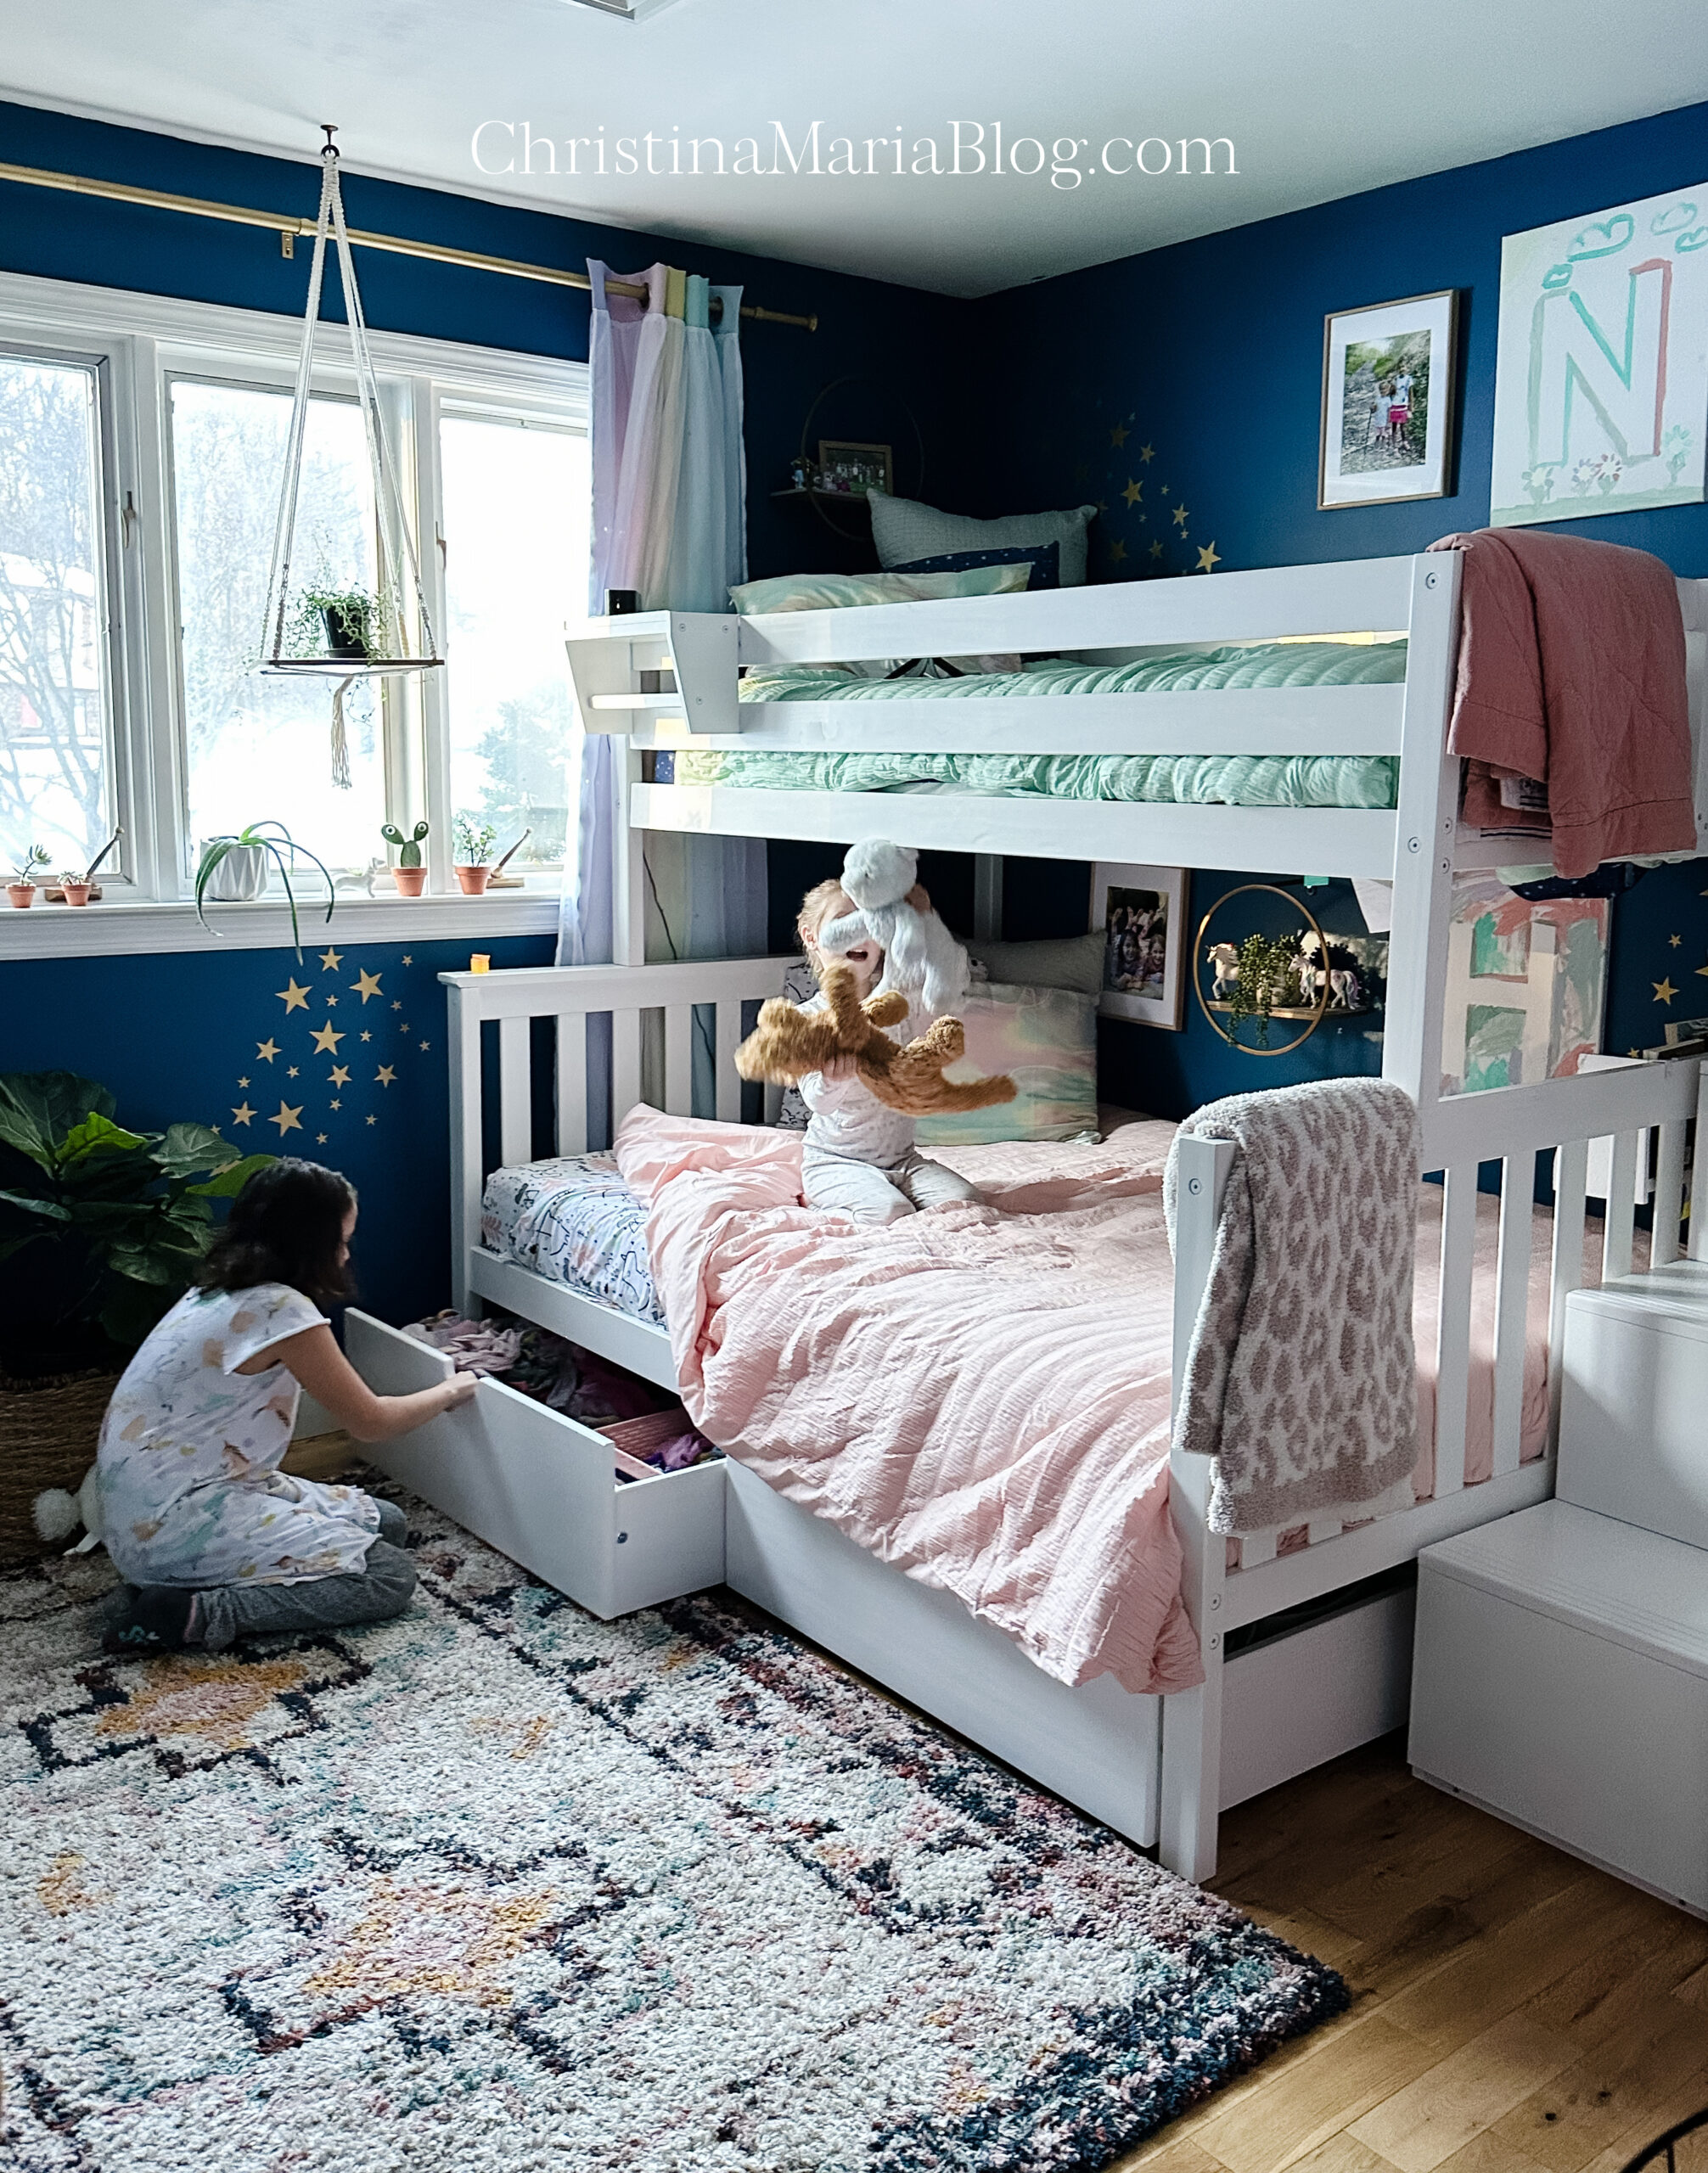 Kids bedroom with bunk beds - Christina Maria Blog